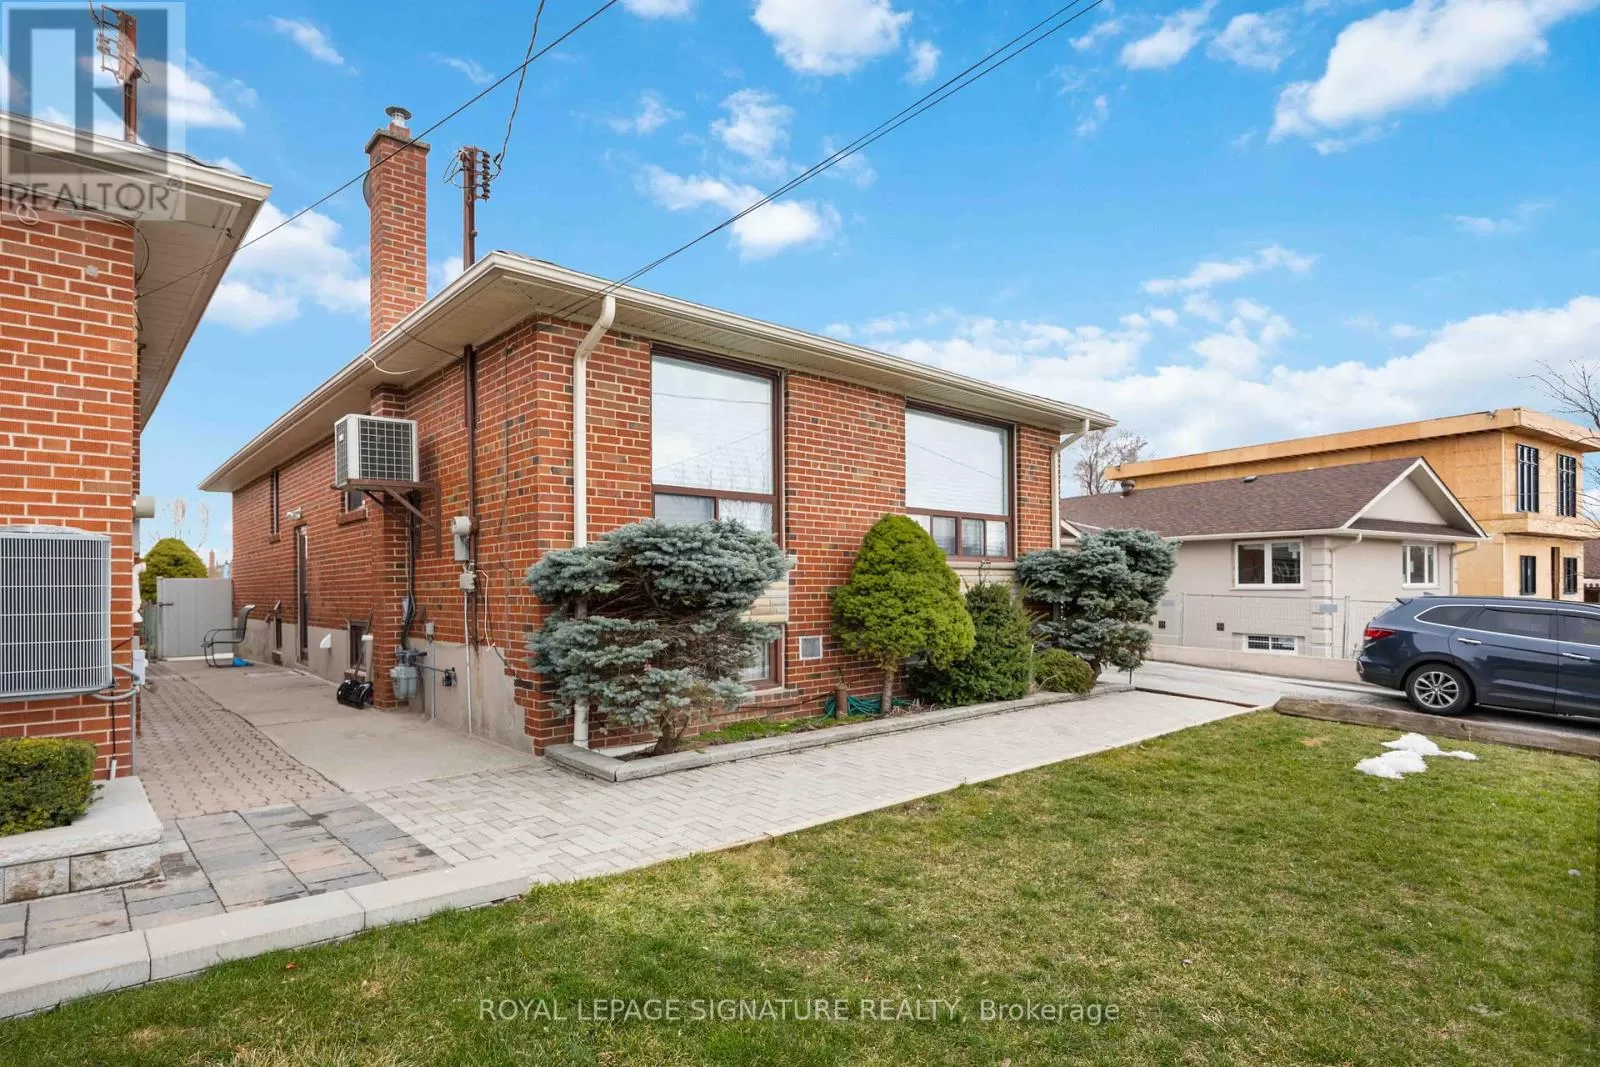 House for rent: Bsmt - 65 Whitburn Crescent, Toronto, Ontario M3M 2S5